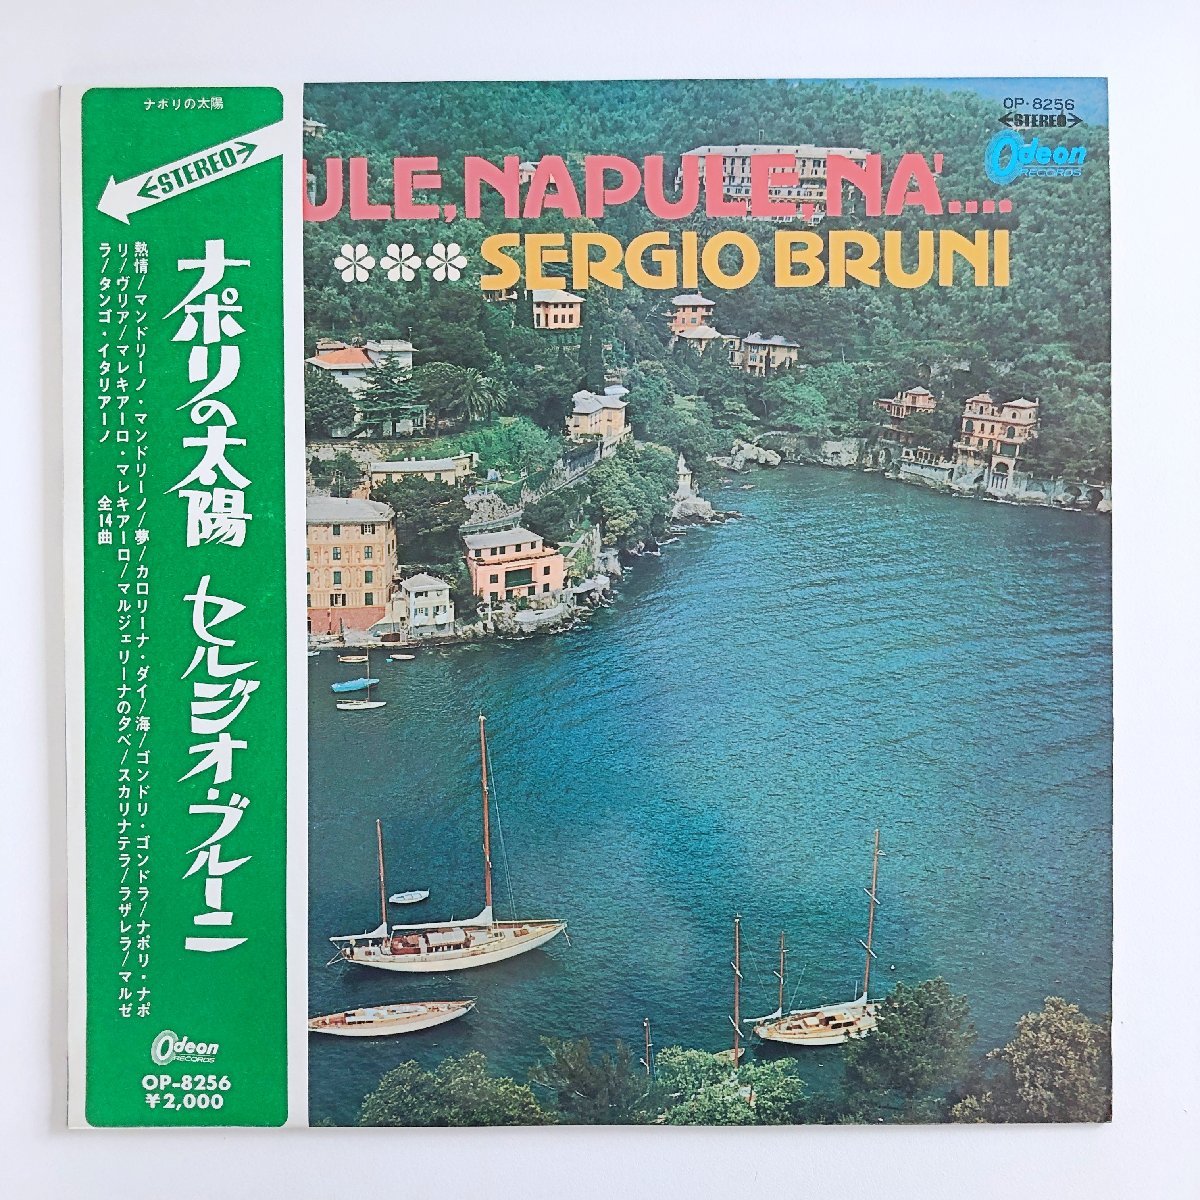 LP/ SERGIO BRUNI / NAPULE, NAPULE, NA'... ナポリの太陽 / セルジオ・ブルーニ / 国内盤 帯付 赤盤 ペラジャケ ODEON OP-8256 30830_画像1